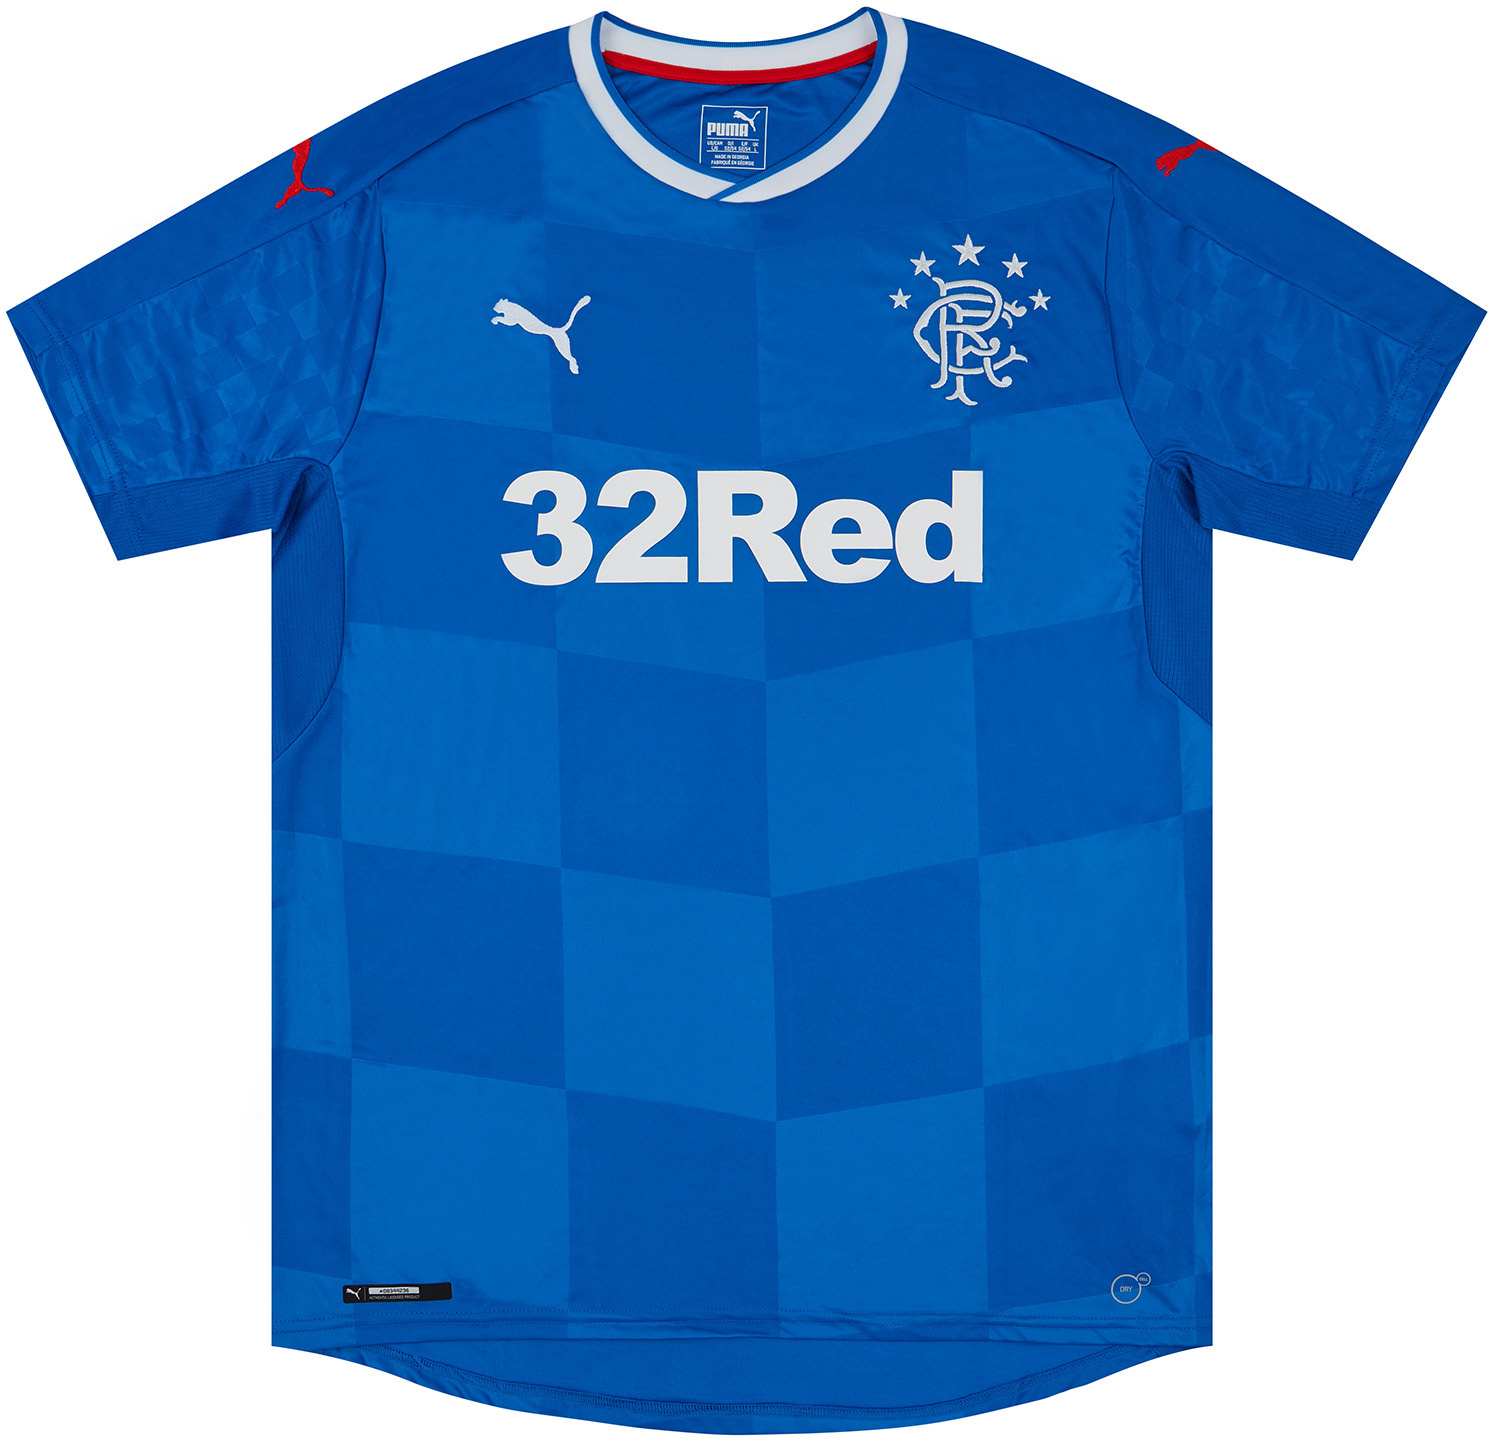 Rangers  home camisa (Original)